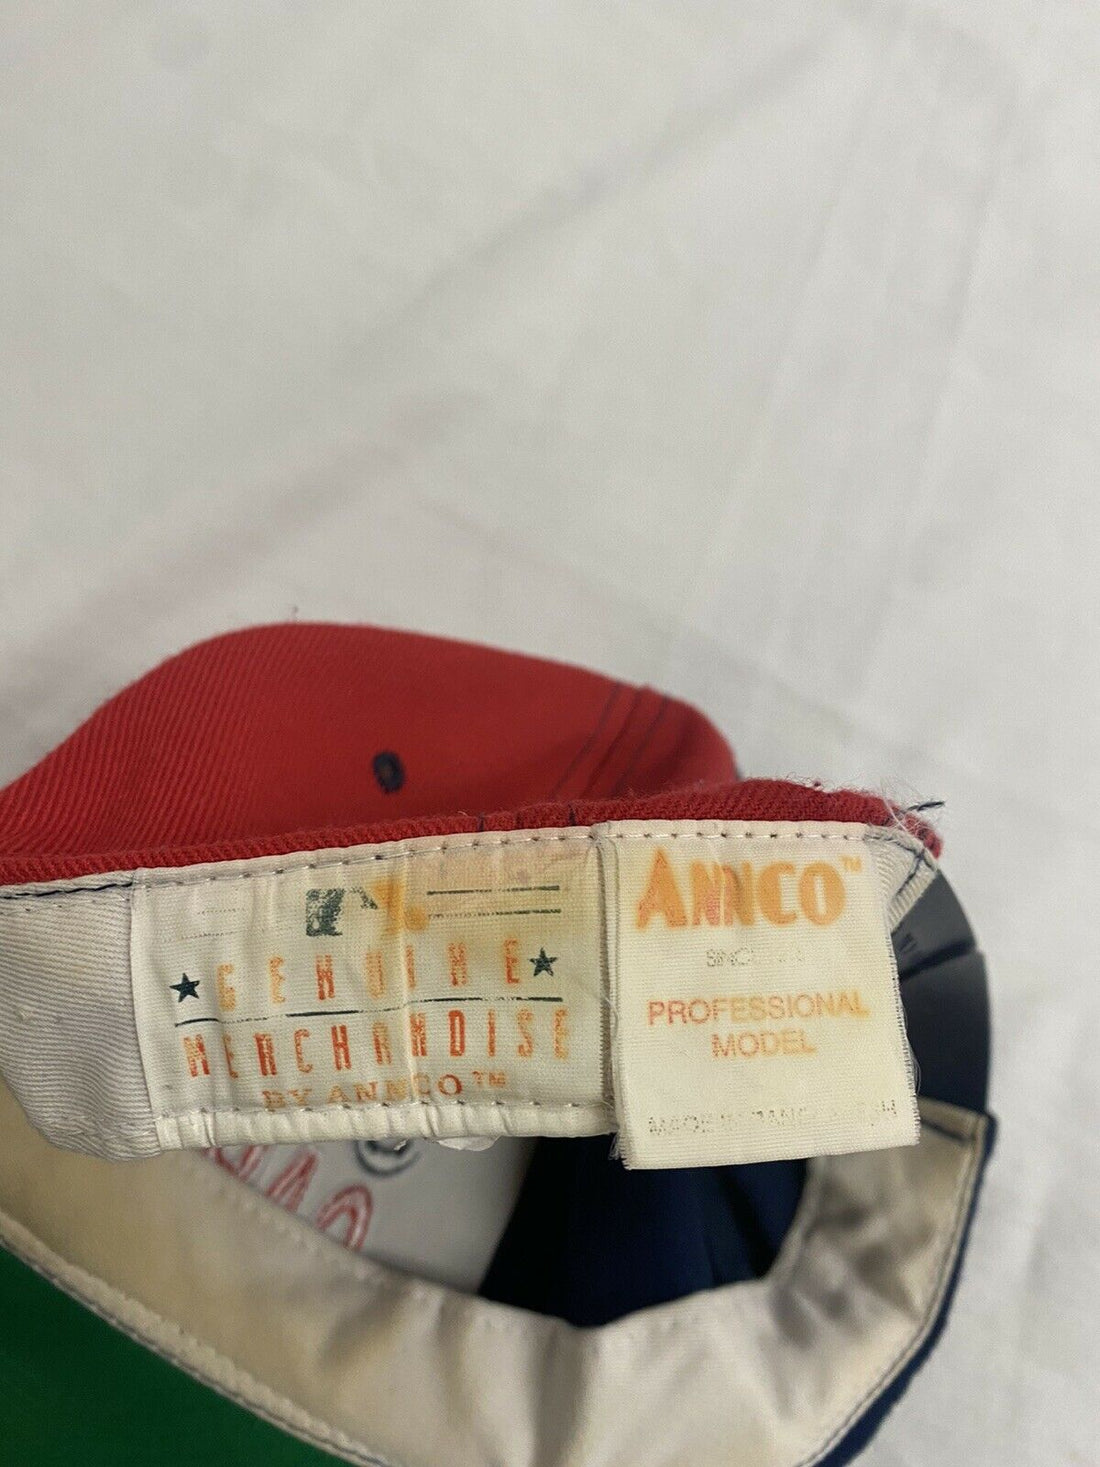 Vintage St Louis Cardinals Annco Snapback Hat Cap OSFA 90s MLB